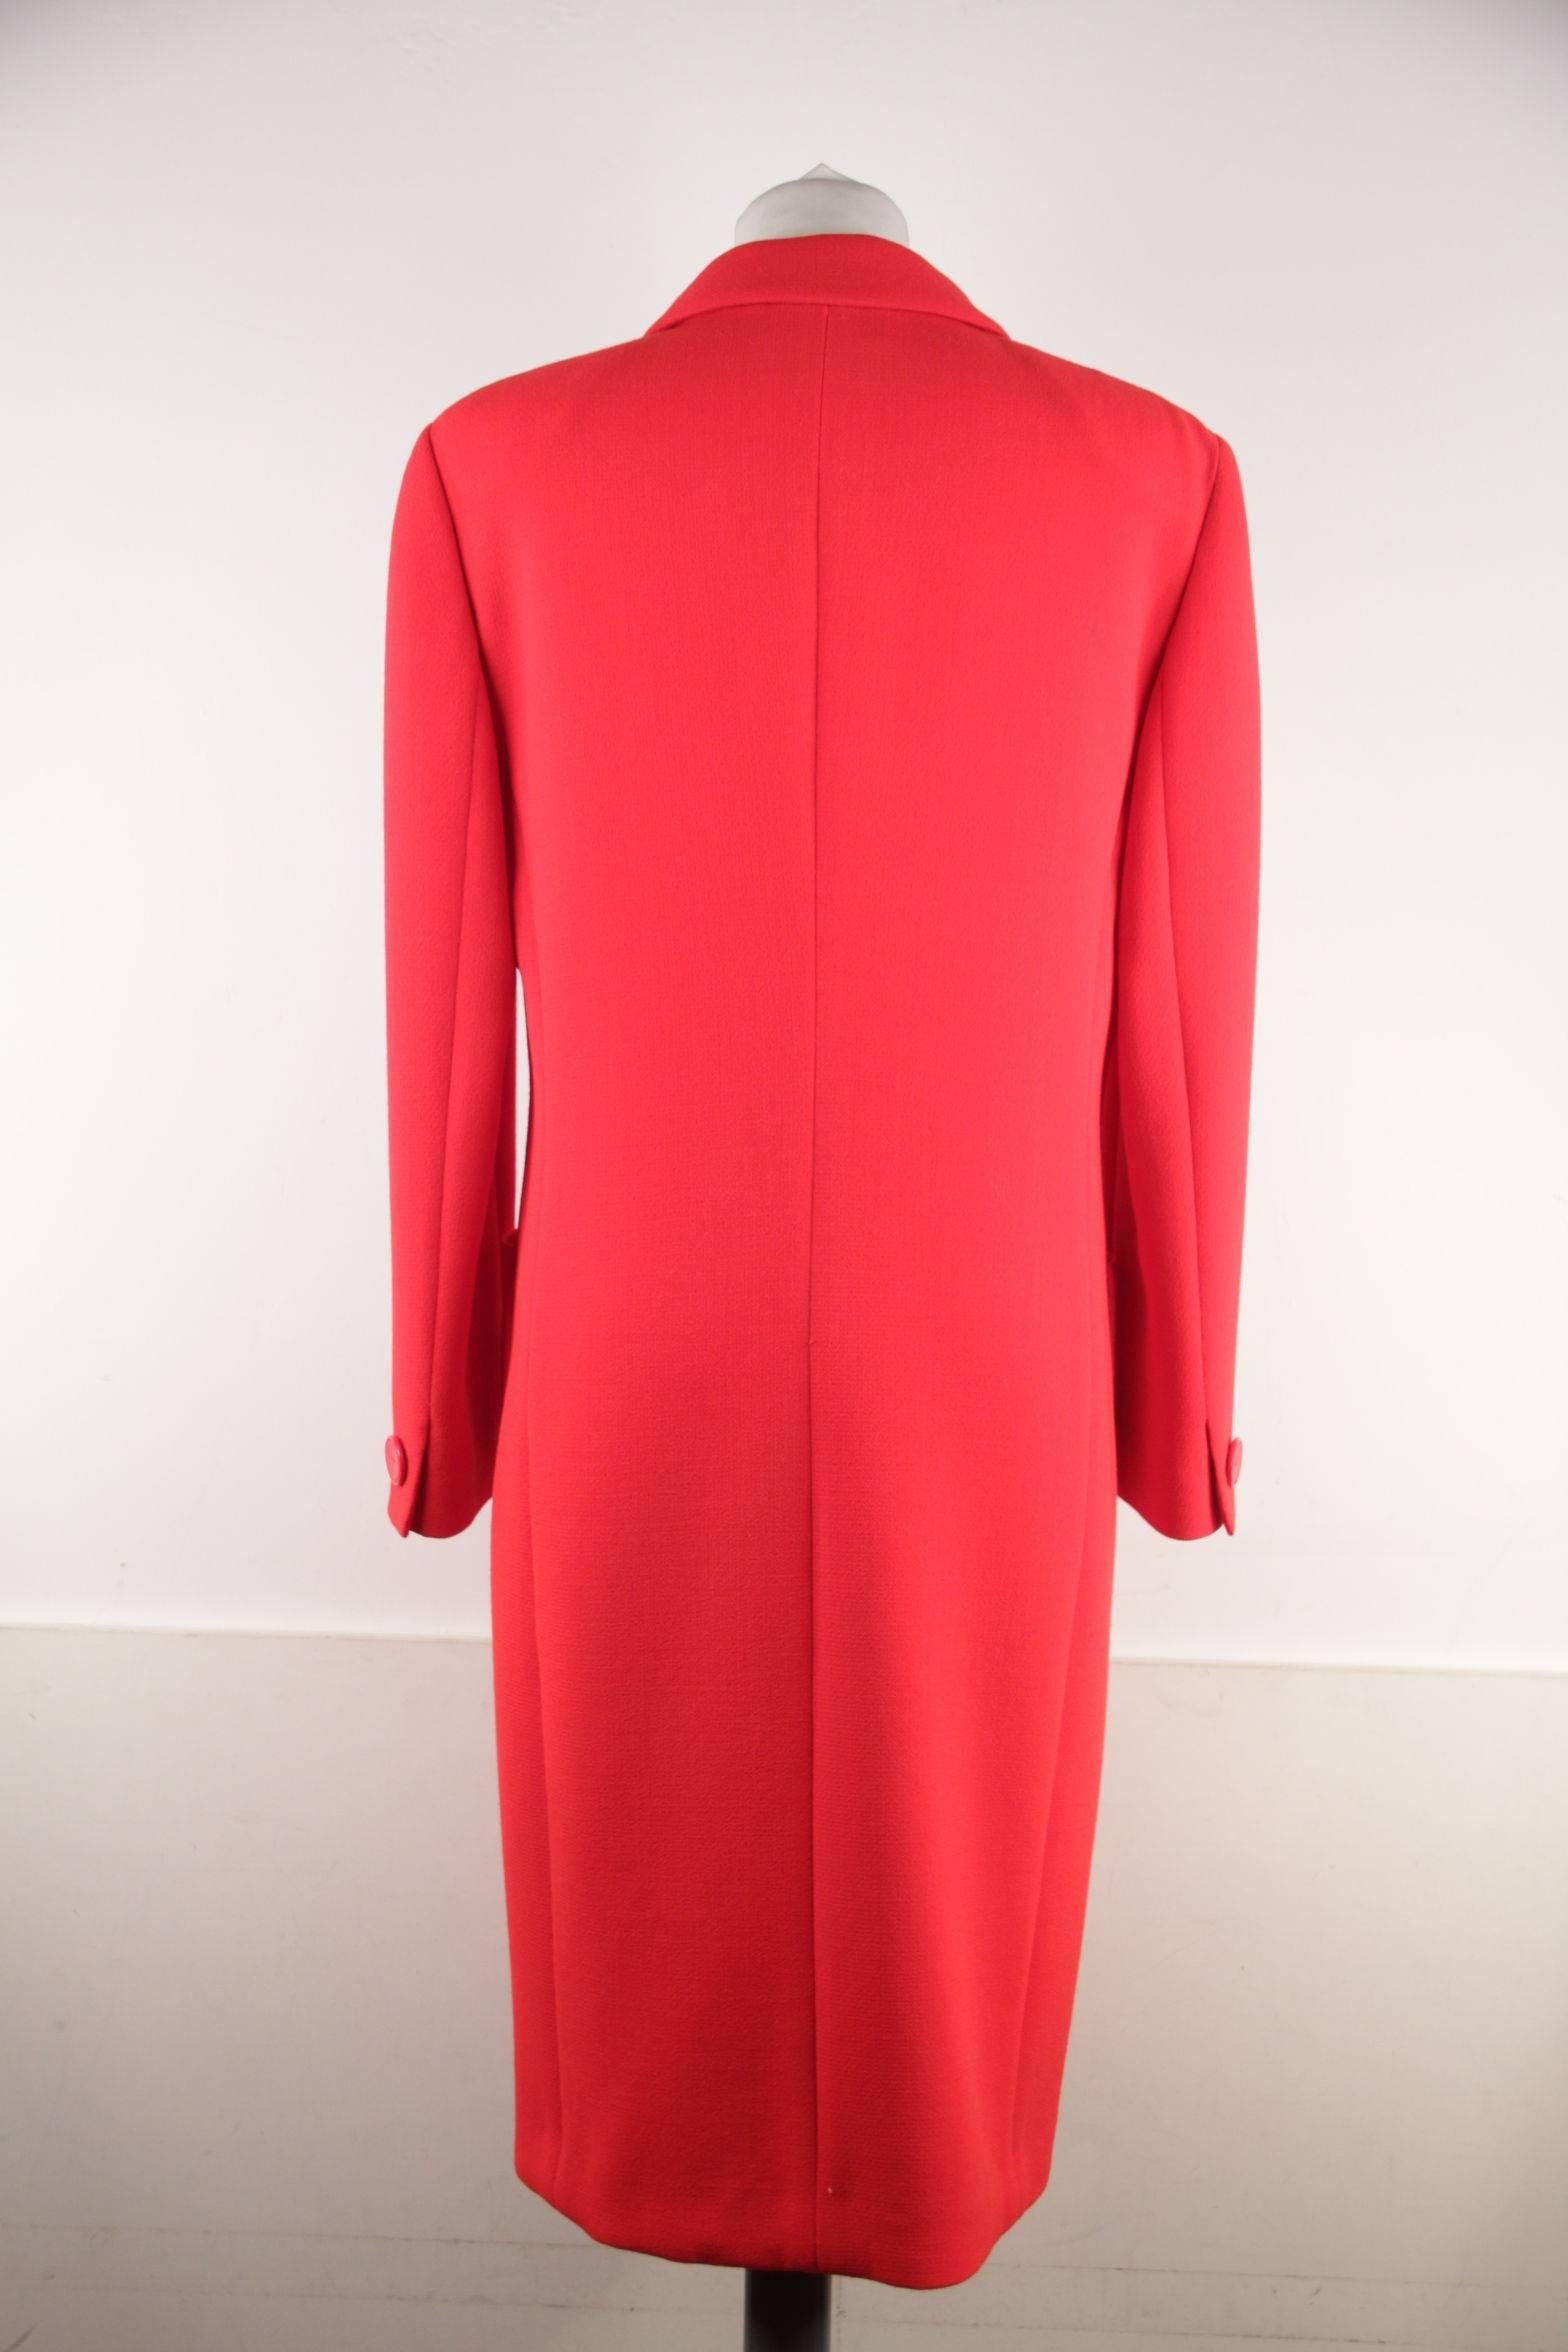 MILA SCHON Italian VINTAGE Red Light Weight Fabric COAT Size 42 IT AJ 1